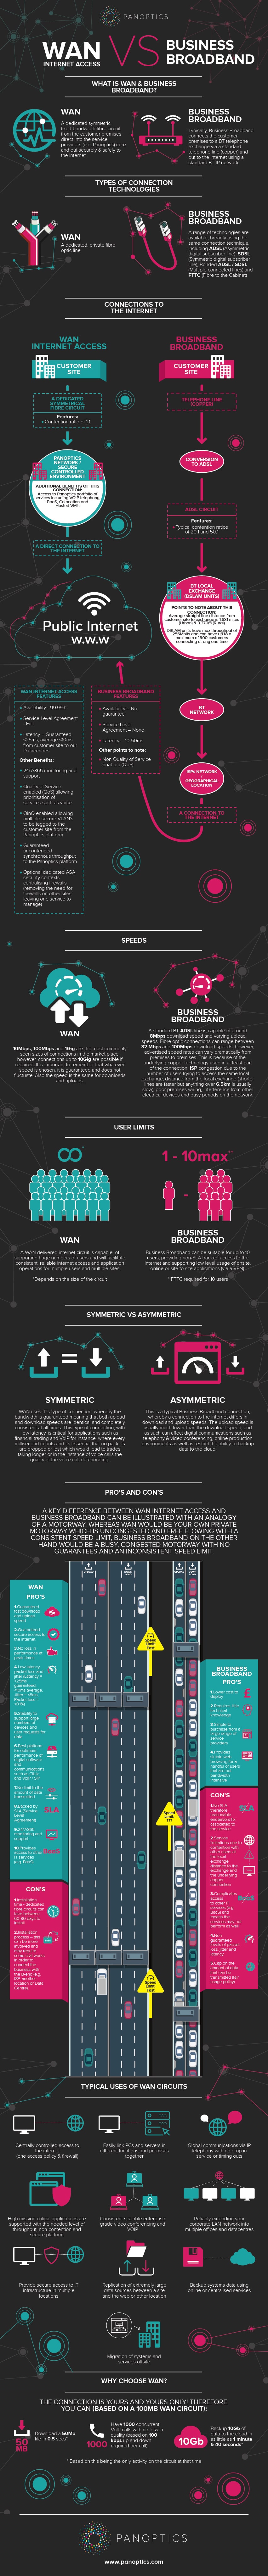 WAN_vs_Business_Broadband_Infographic